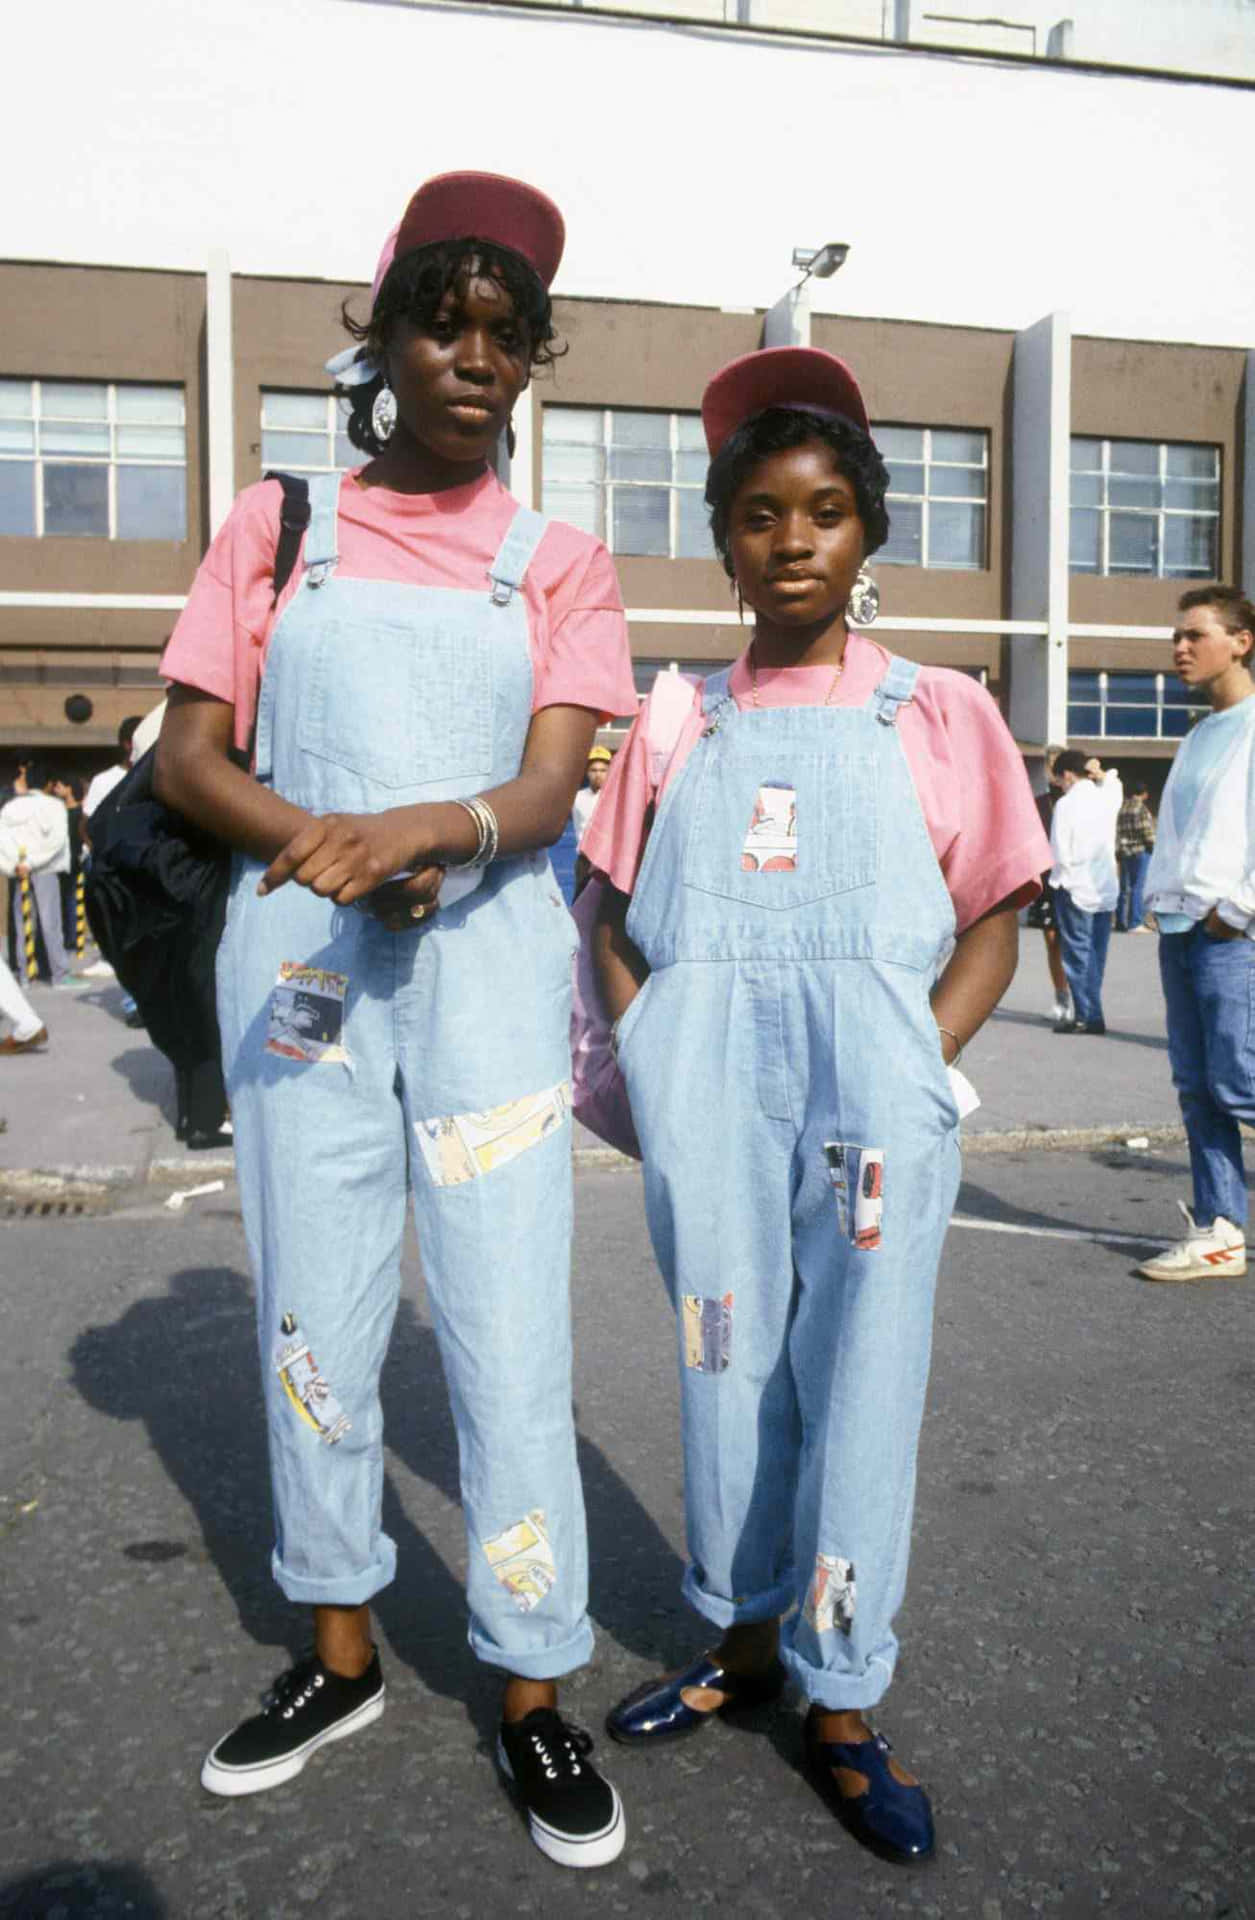 1980s fashion girls